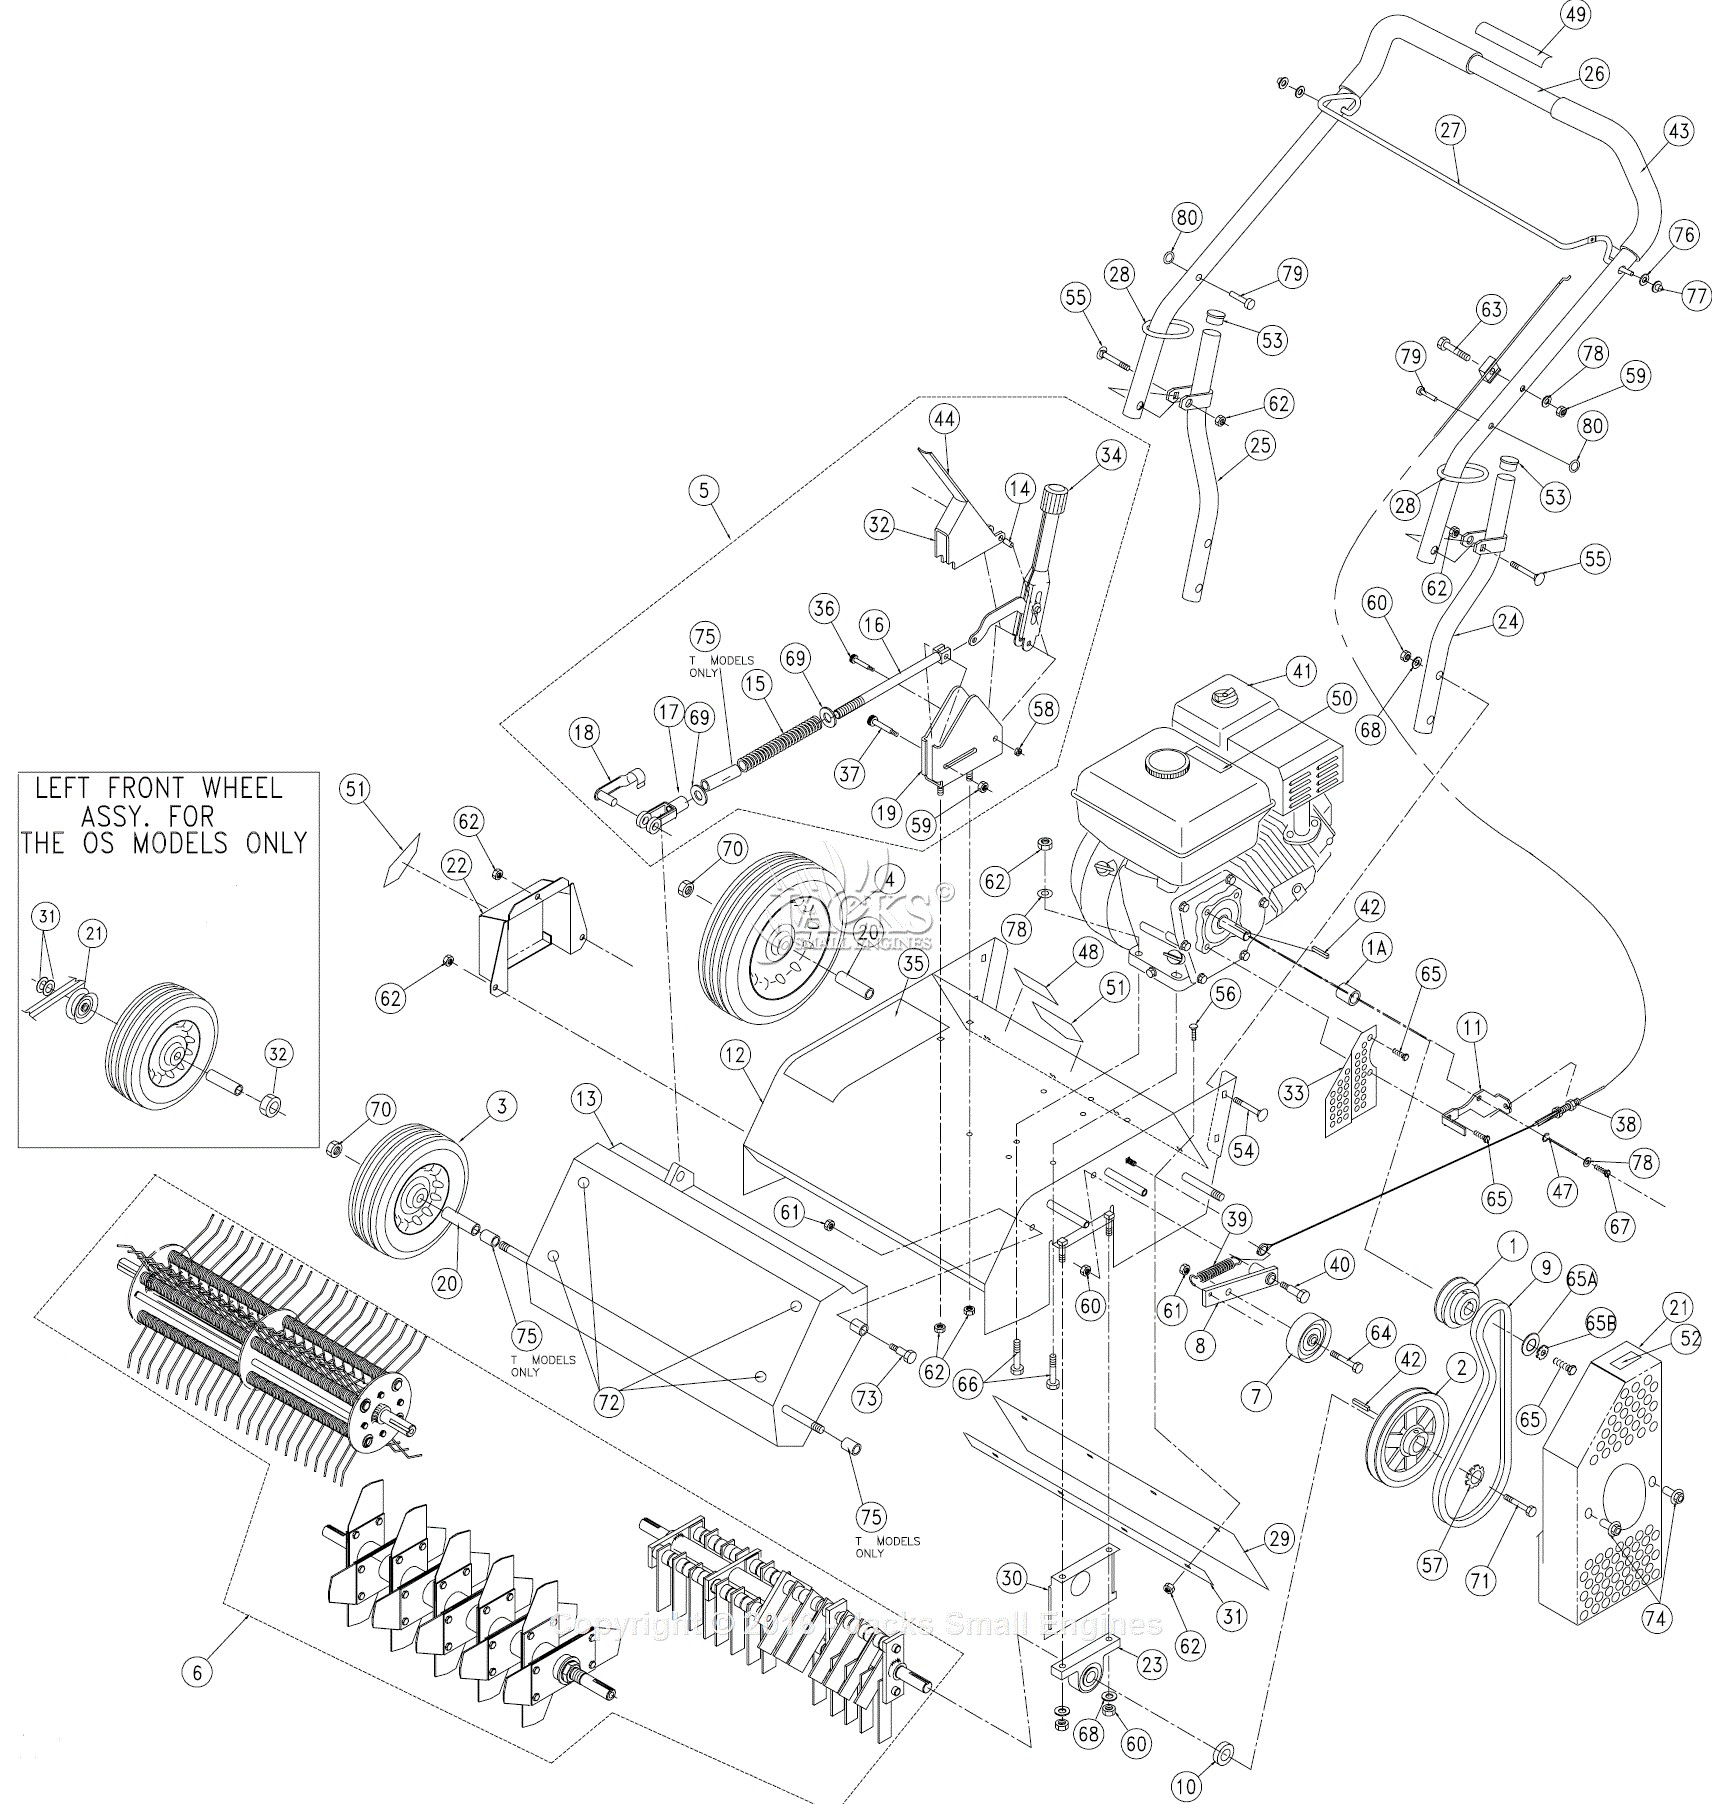 Honda Gx160 Engine Diagram Billy Goat Os551h Parts Diagram for Main assembly Of Honda Gx160 Engine Diagram